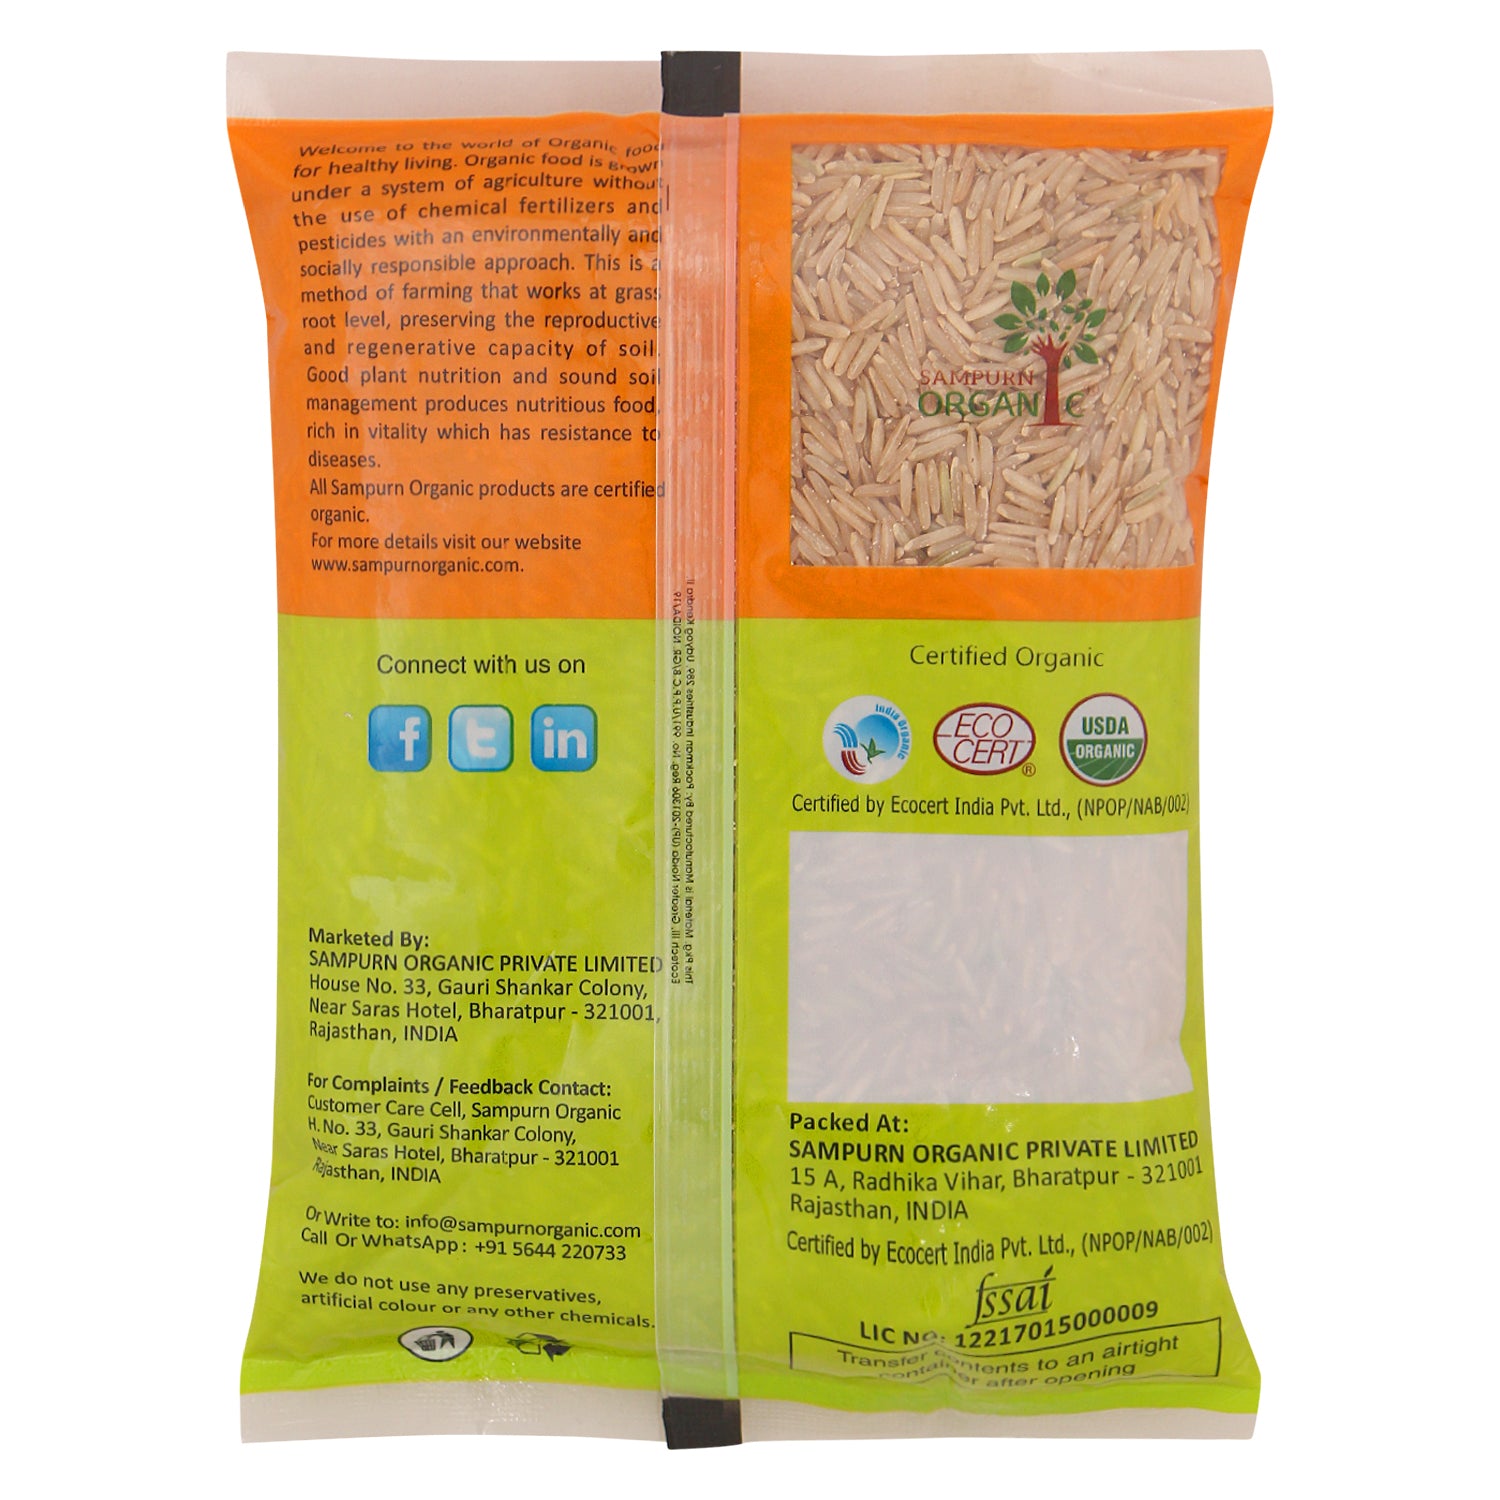 Sampurn Organic basmati brown rice 500 g combo pack for daily use basamati raice best quality chawal extra long grain for biryani good taste and healthy nutrition ogranic